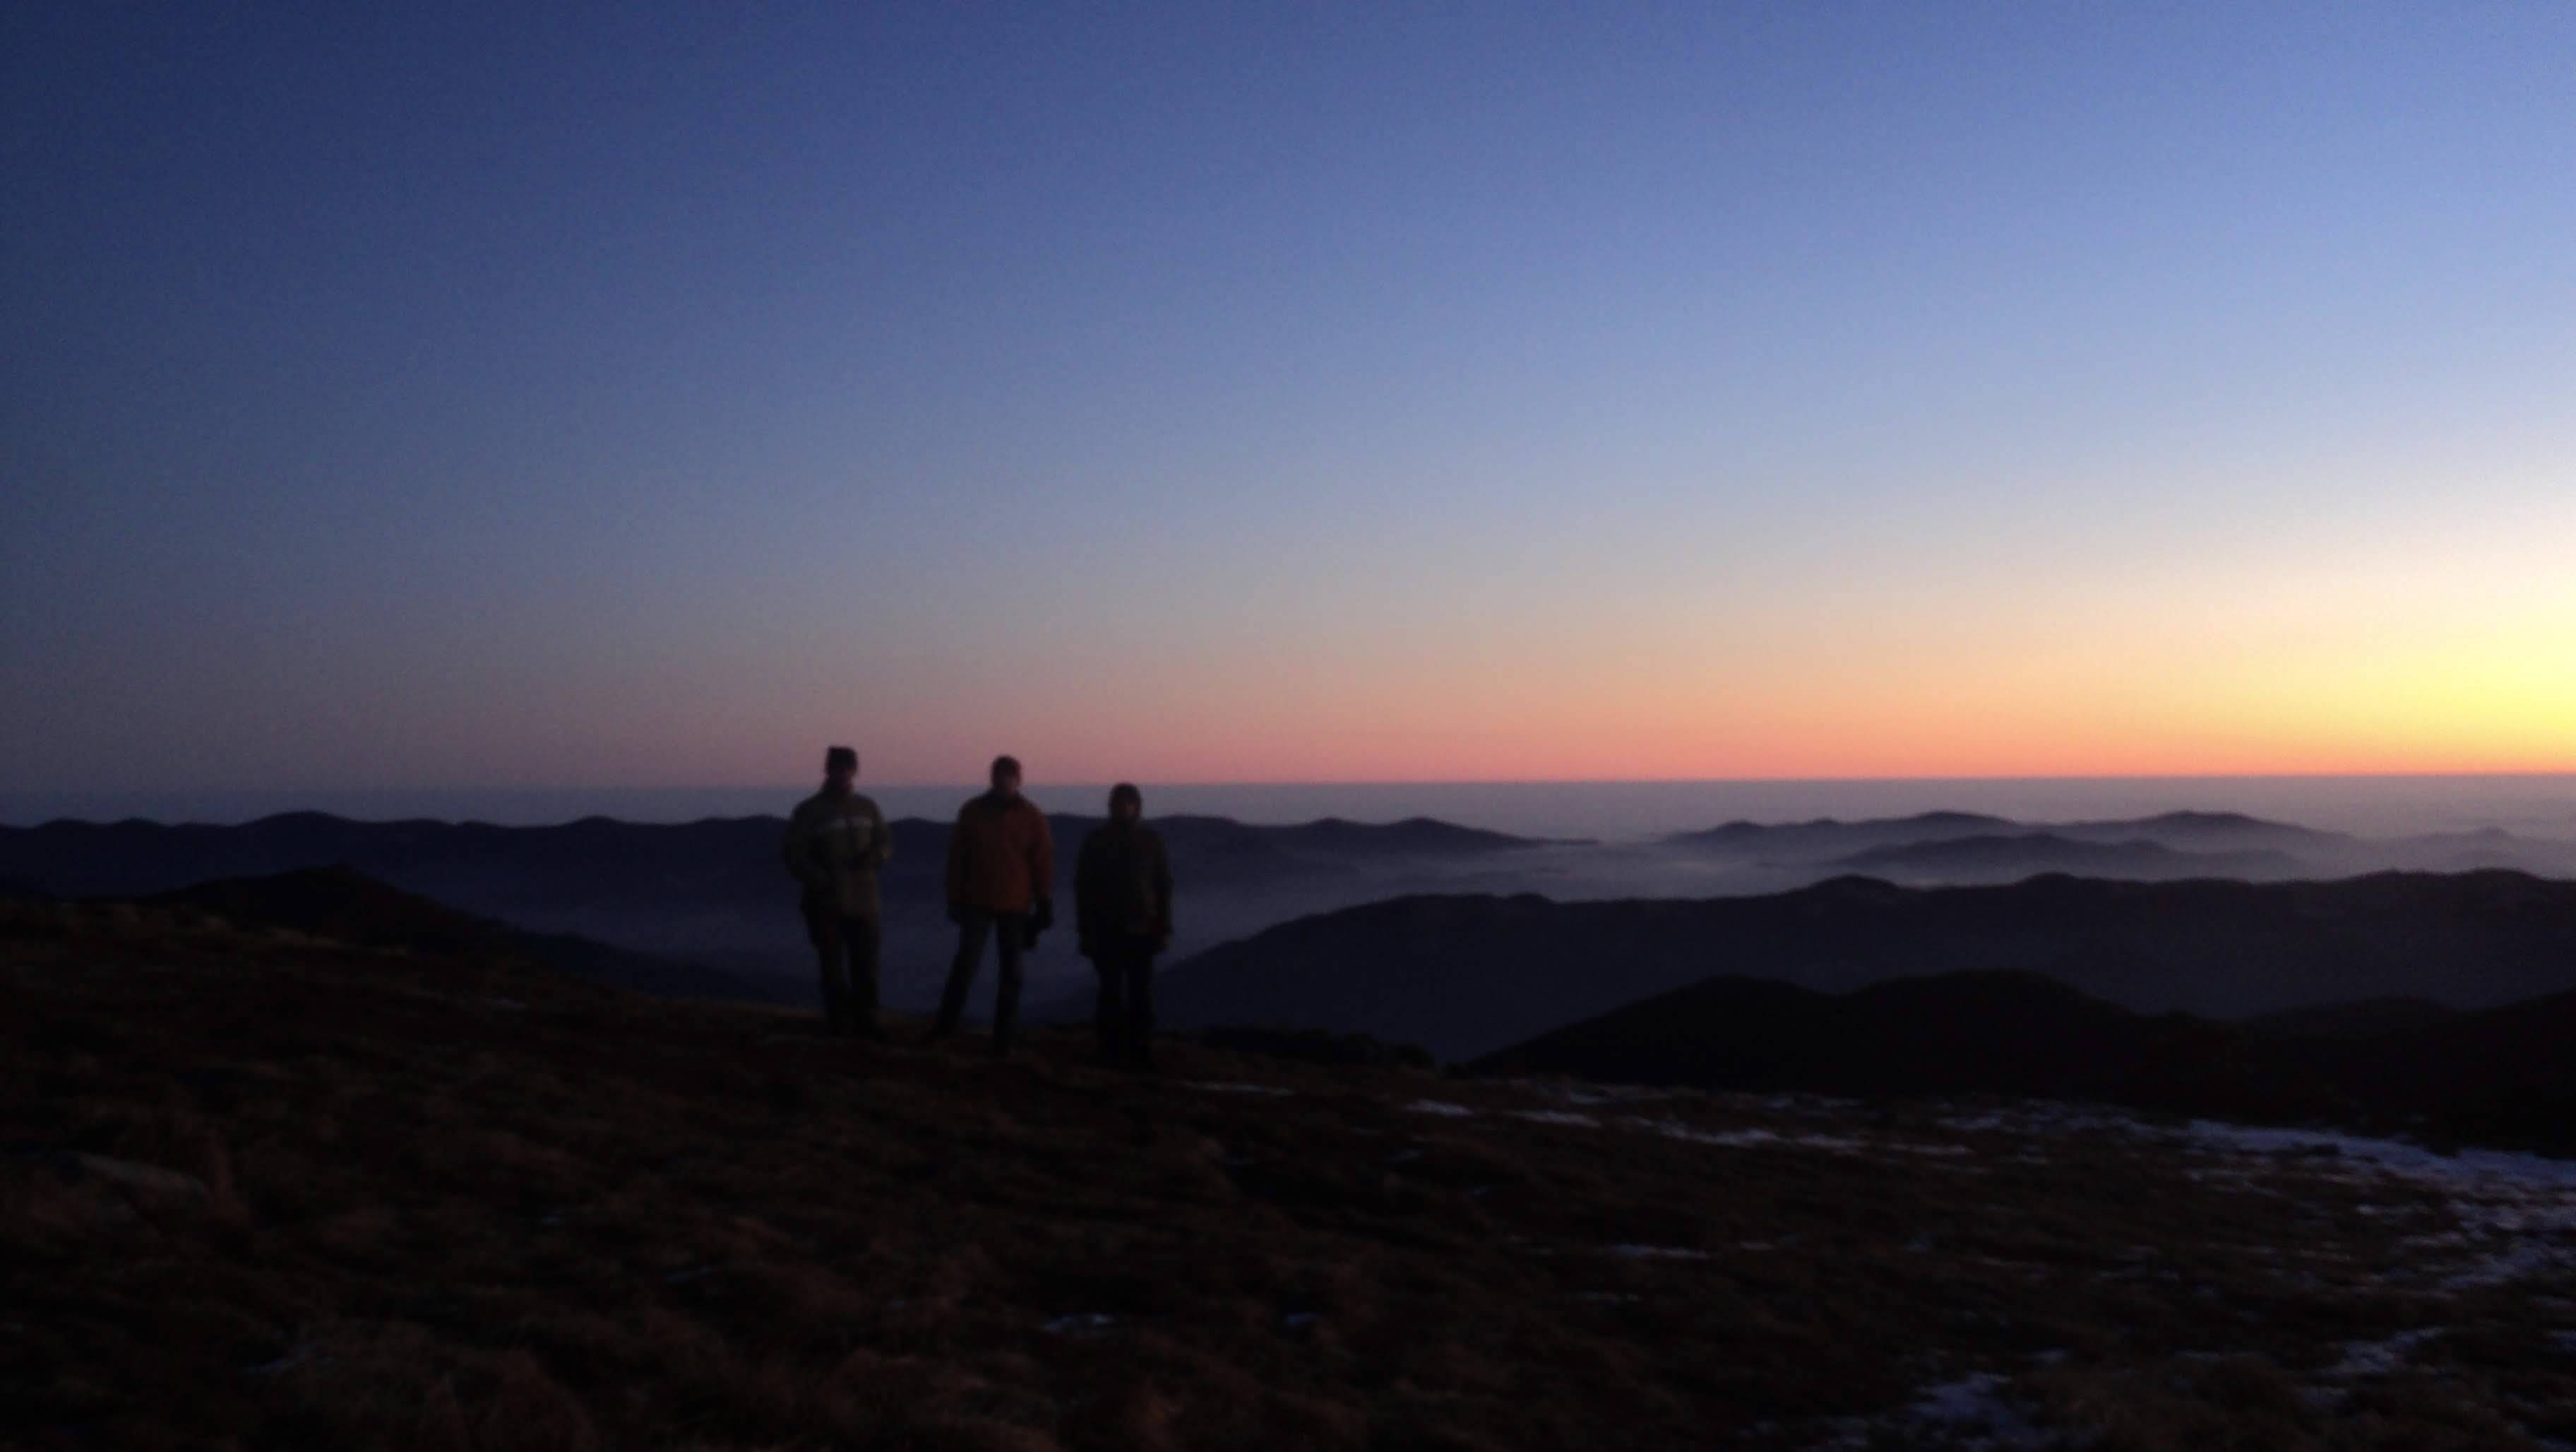 Mountain travelers meet the sunrise